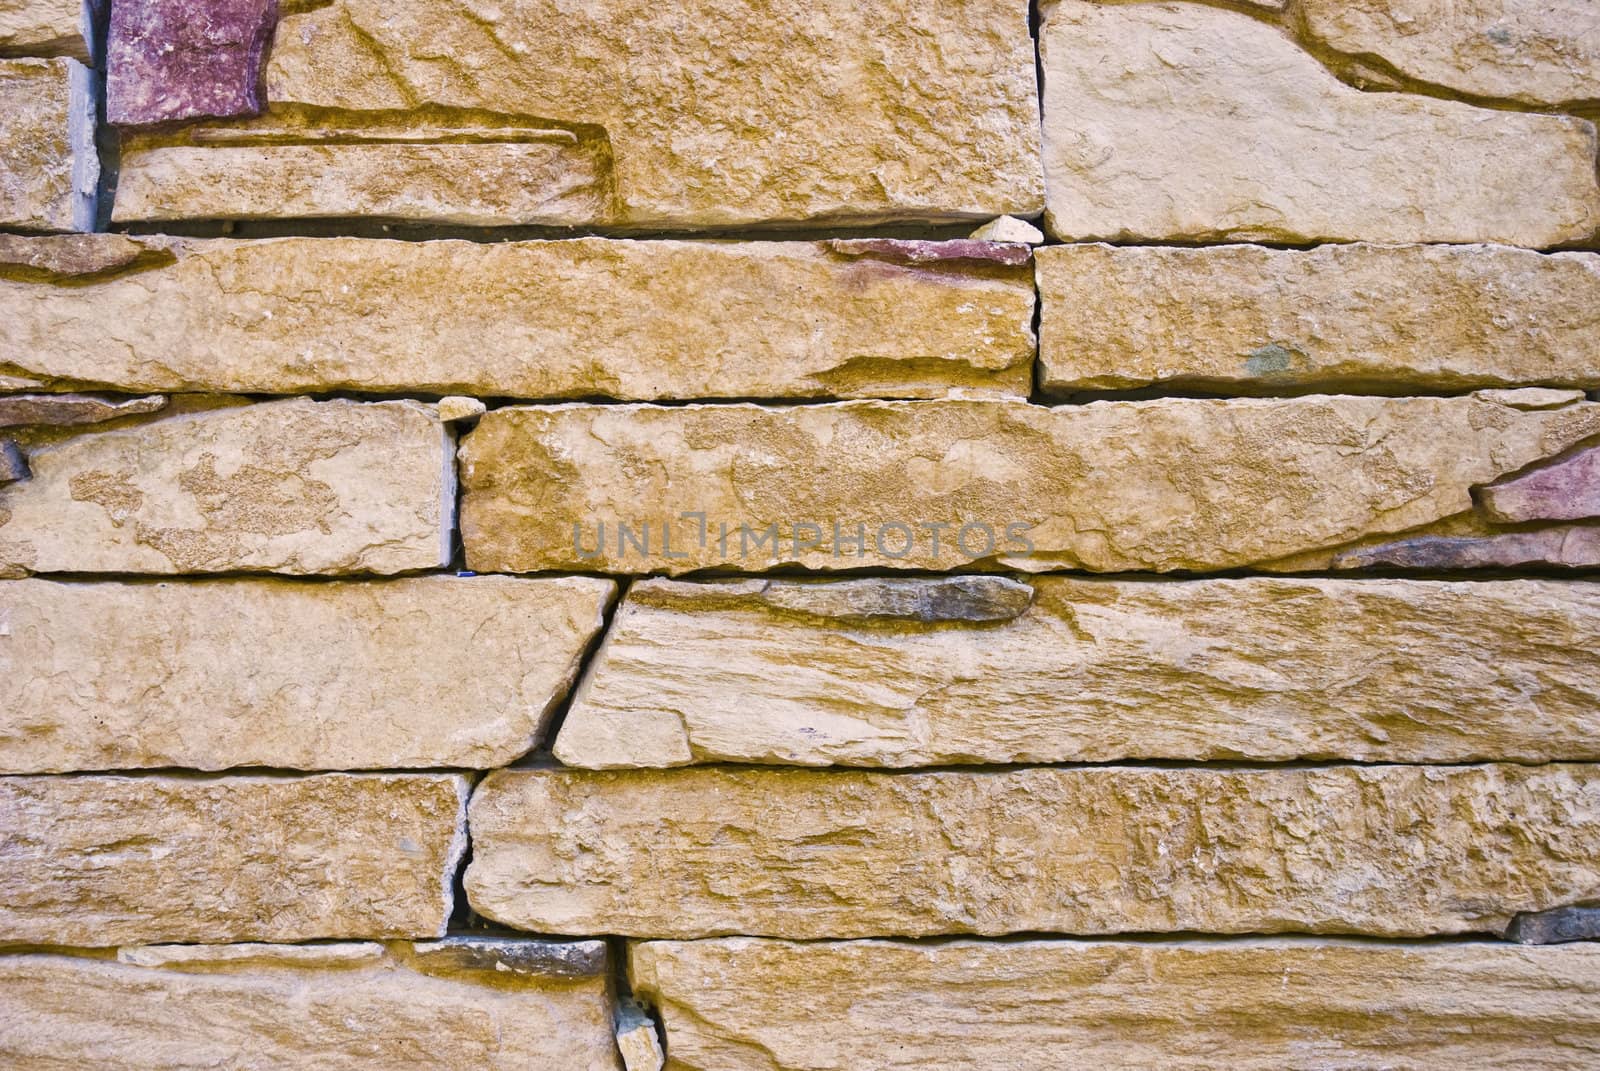 stone bricks in walls in the street by mozzyb